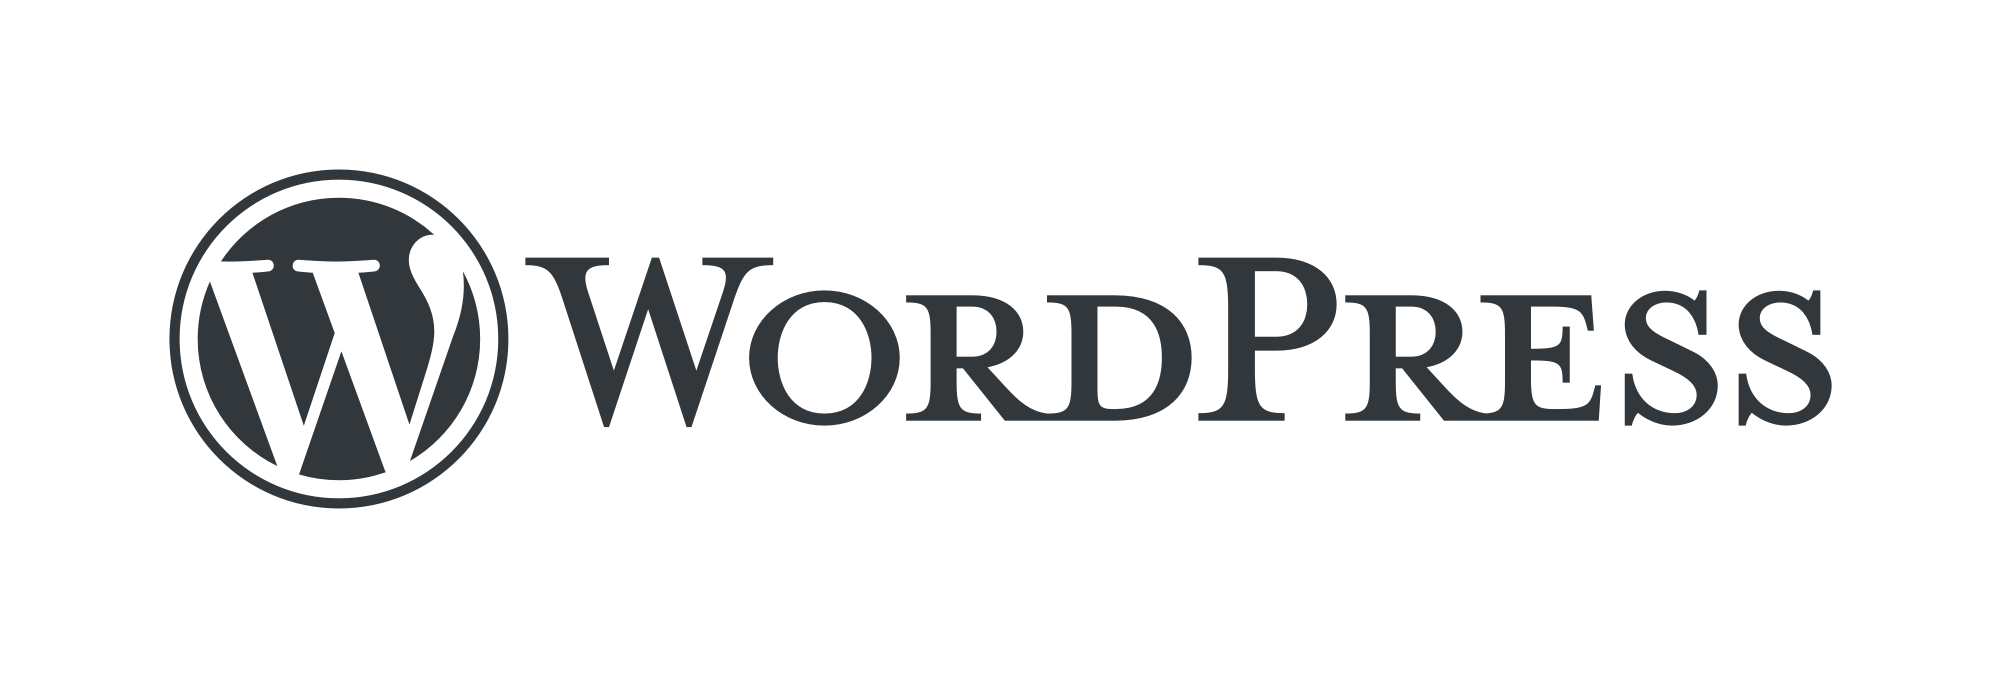 integrates with Wordpress